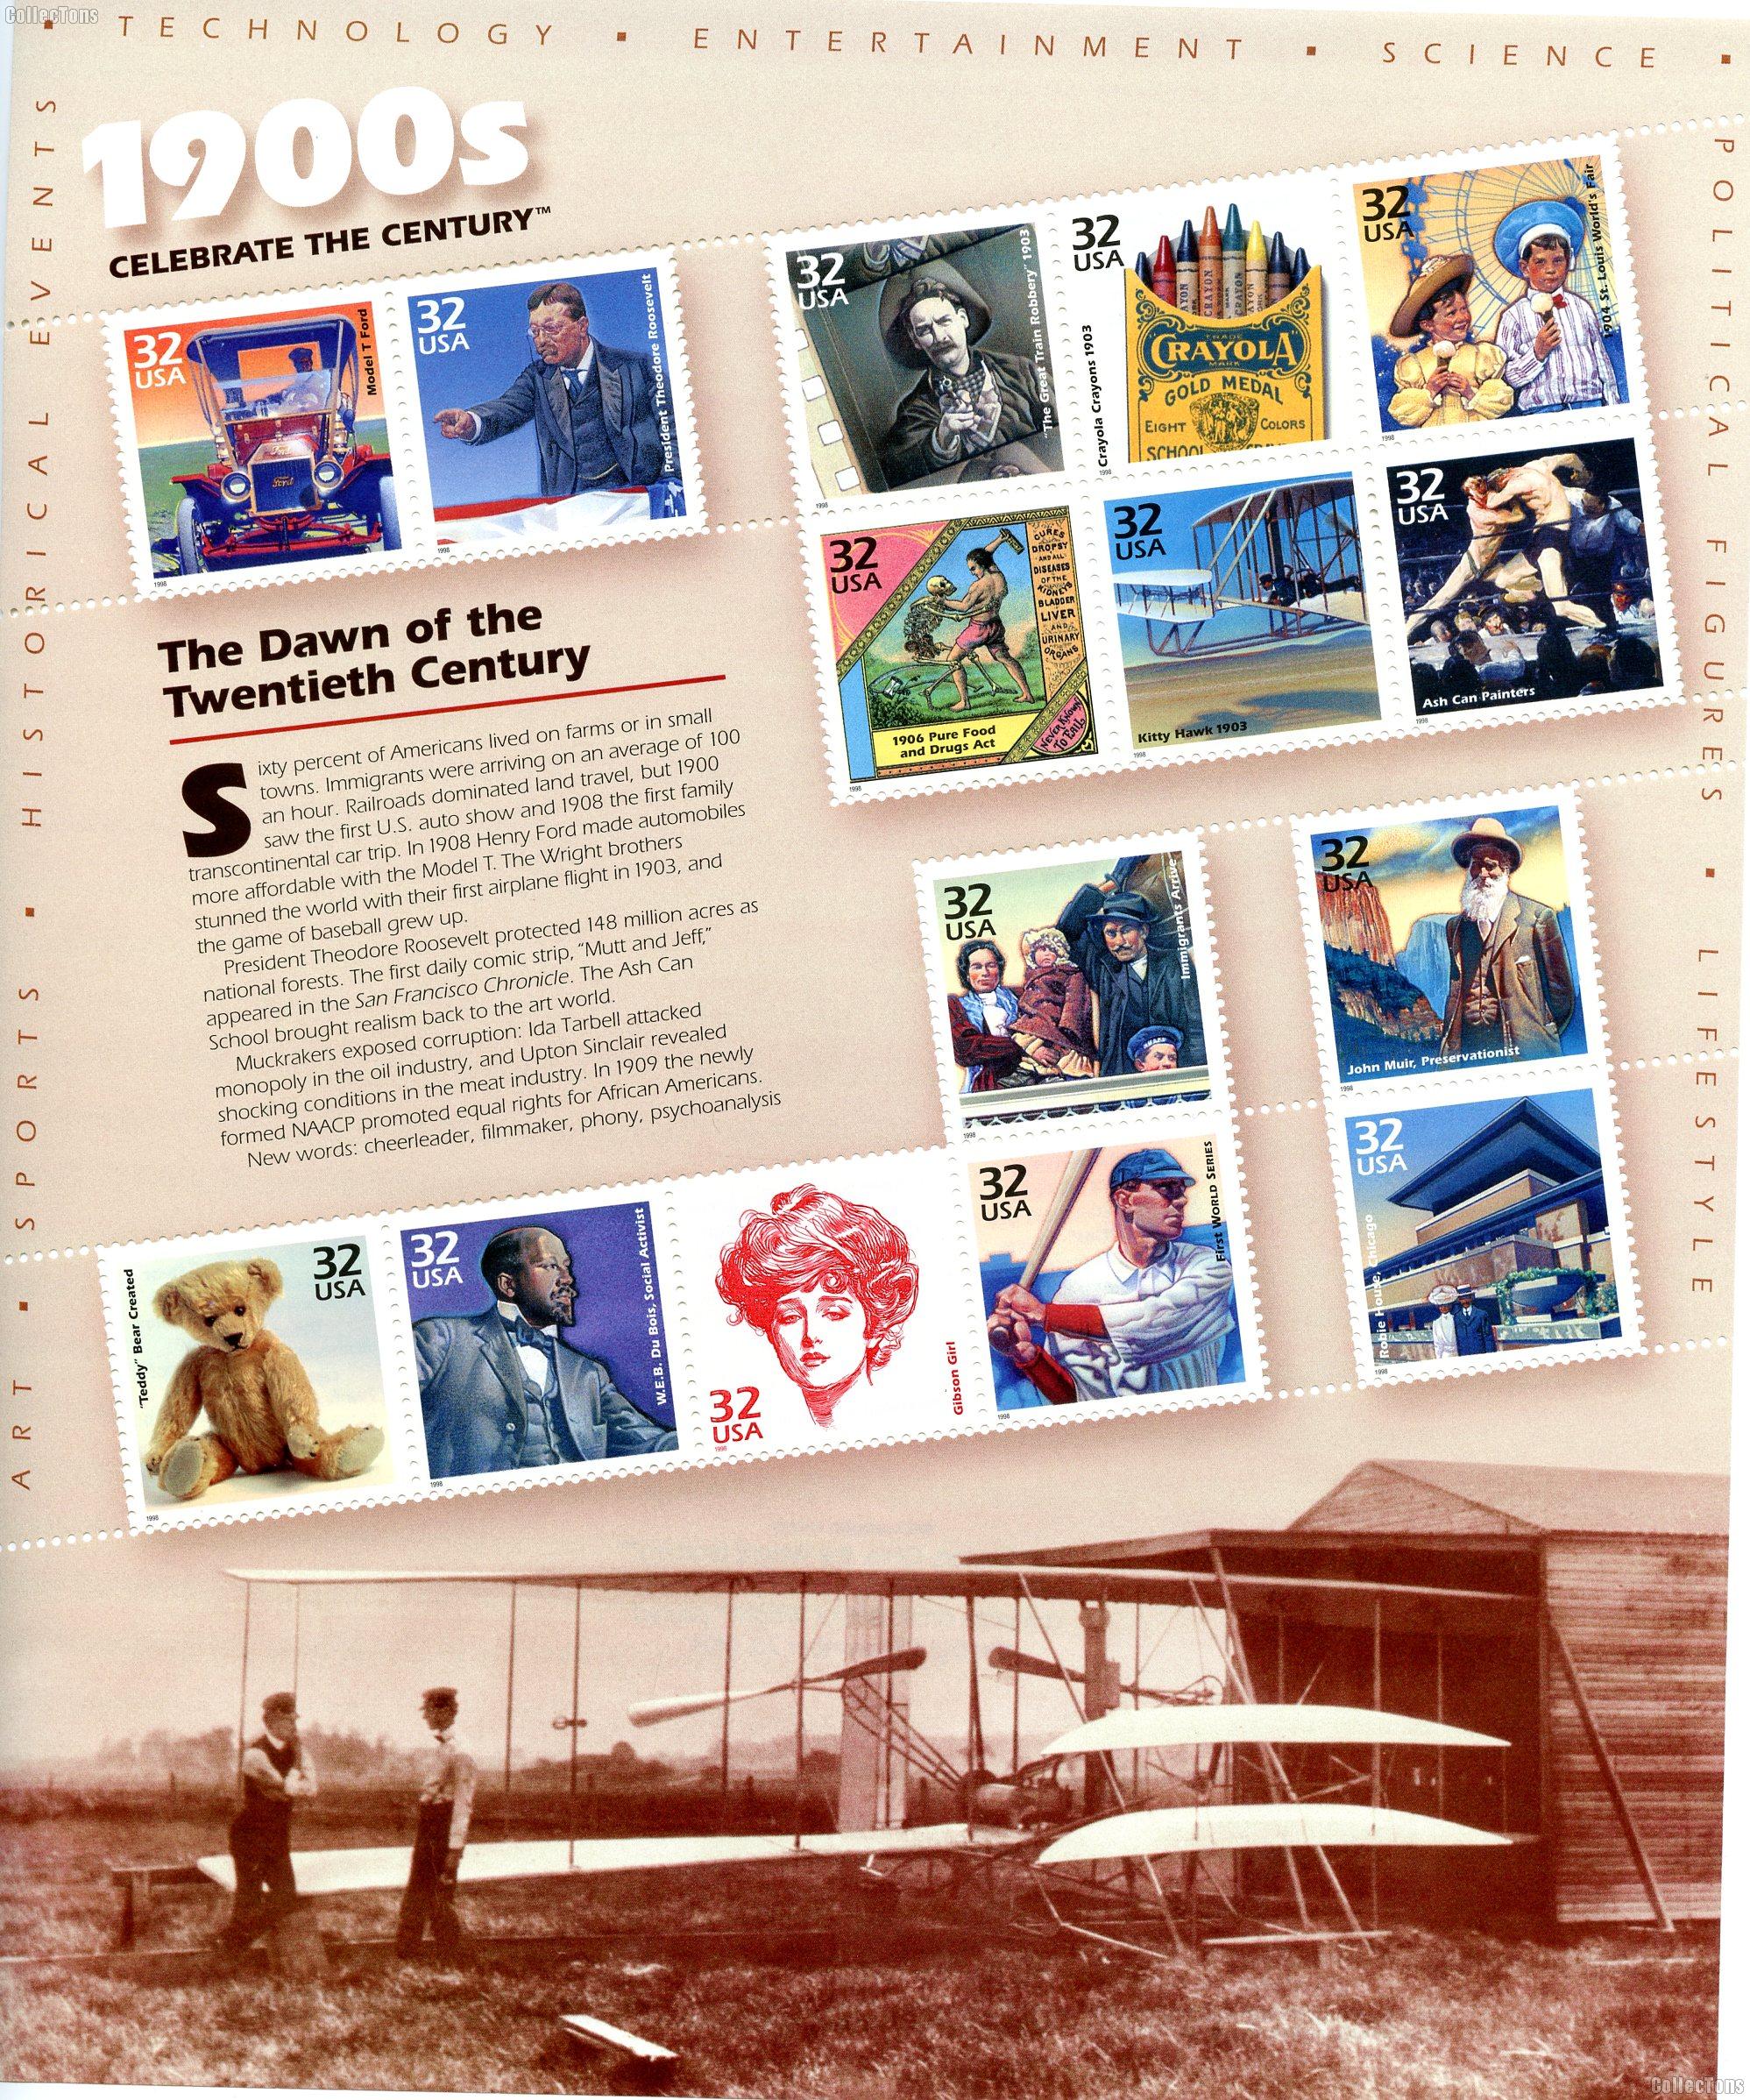 1998 1900s Celebrate the Century 32 Cent US Postage Stamp Unused Sheet of 15 Scott #3182